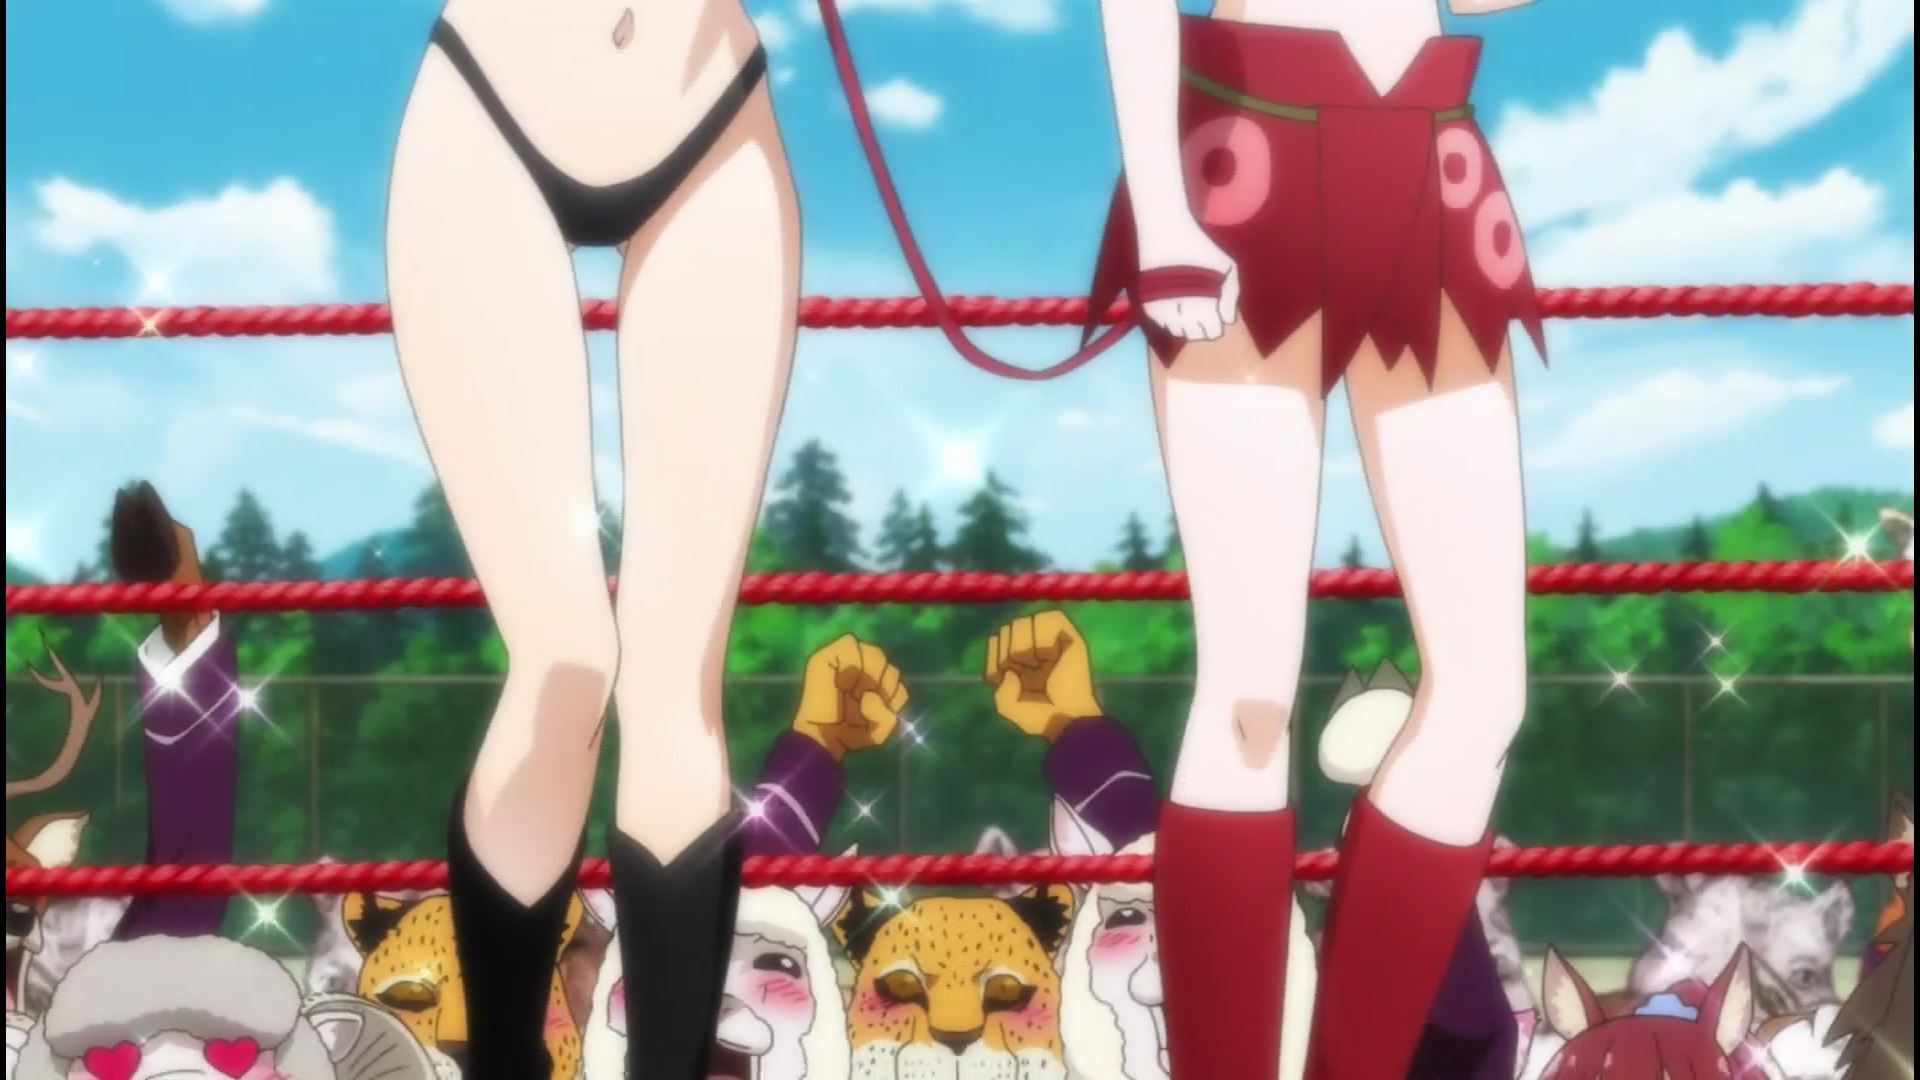 Anime [Shimarenuse] Seaton Gakuen] scene that girls become insanely erotic costumes in episode 12 5